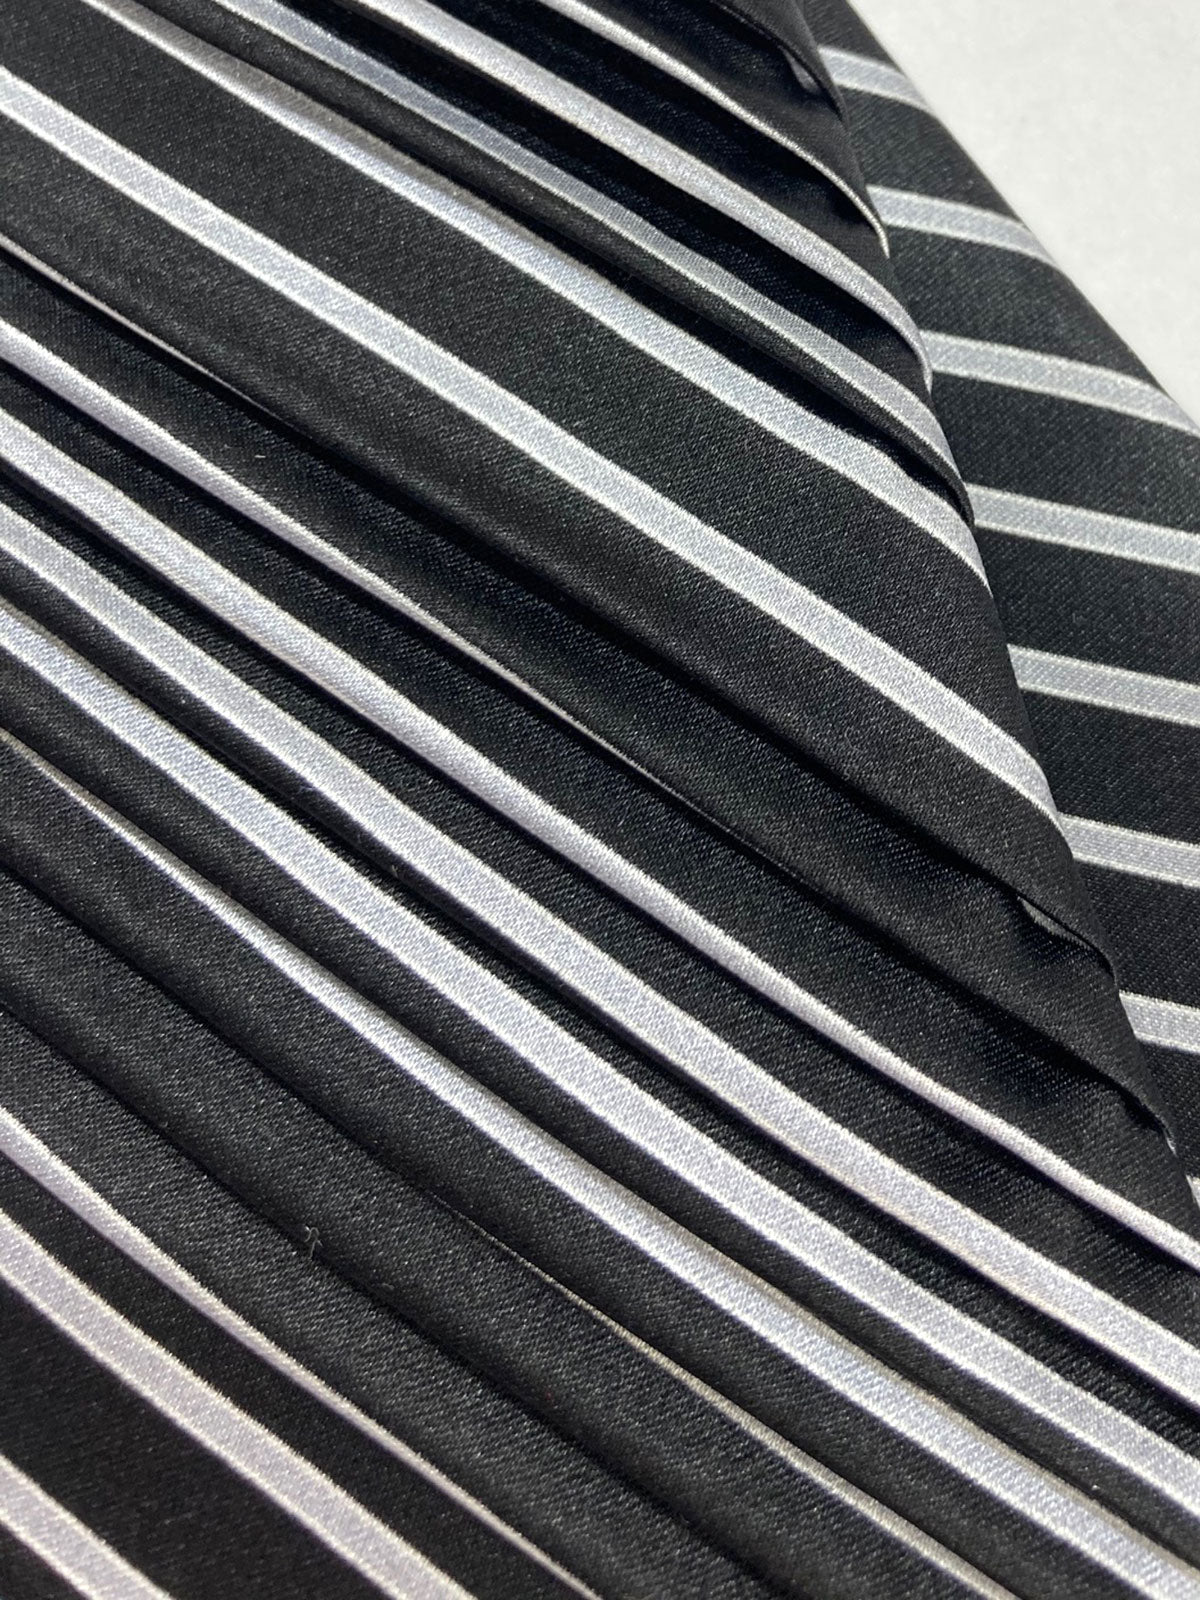 Vitaliano Pancaldi PLEATED SILK Tie Black Gray Stripes